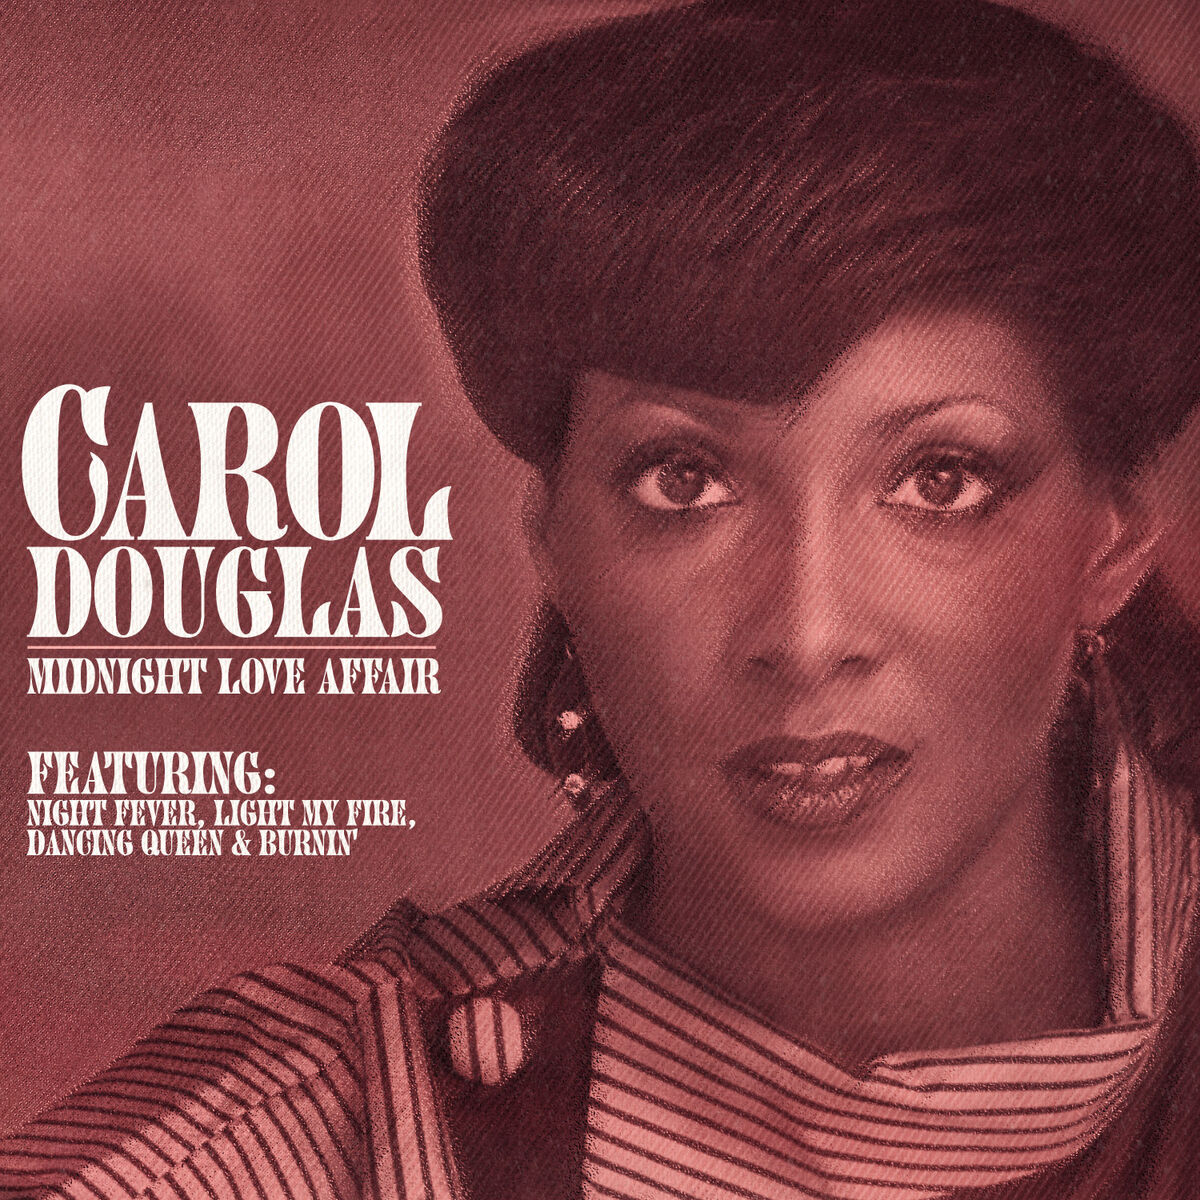 Carol Douglas: albums, songs, playlists | Listen on Deezer